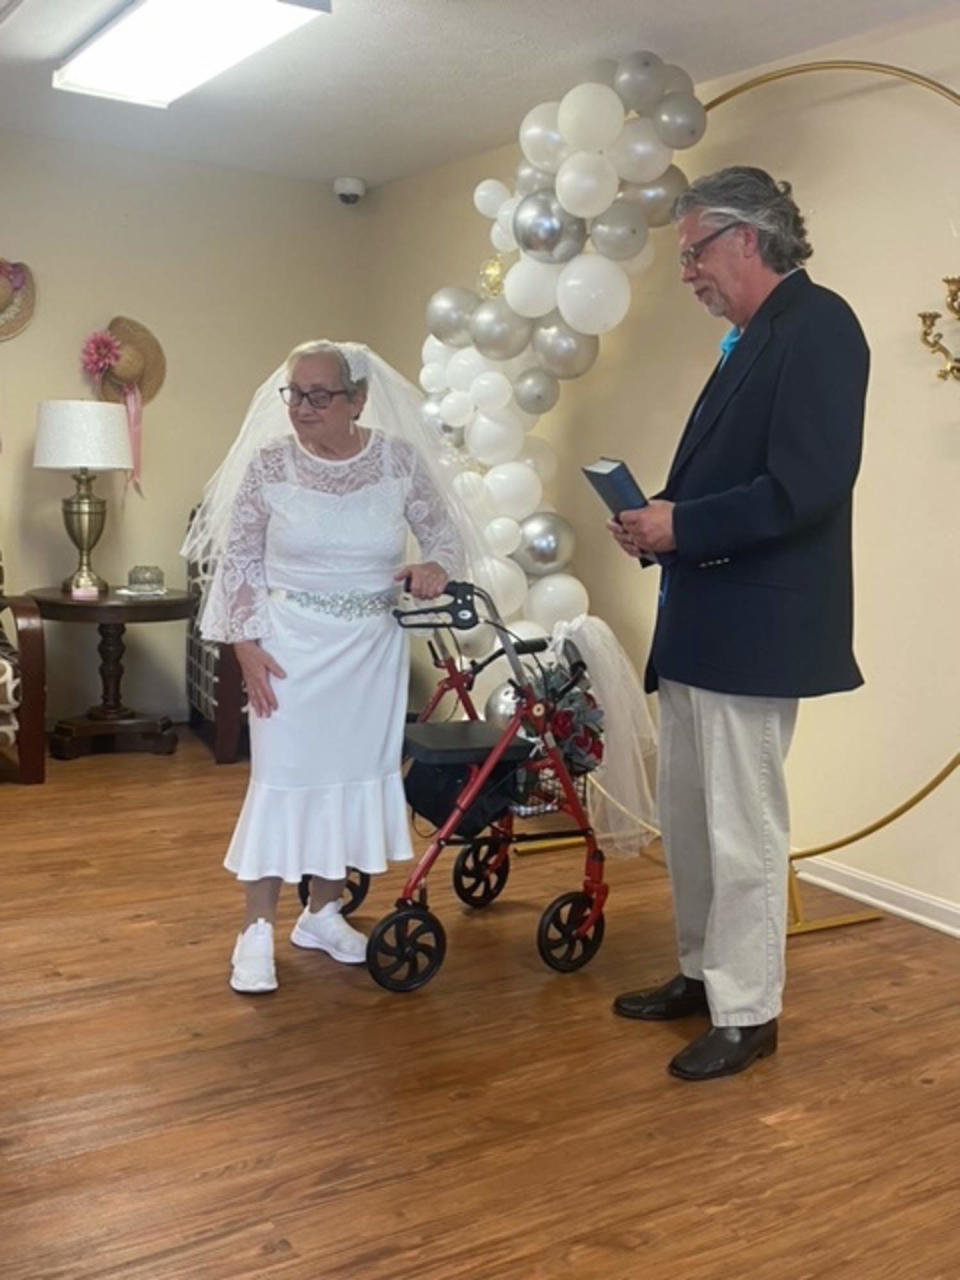 77-Year-Old Ohio Woman Dorothy Fideli Marries Herself (Courtesy Donna Pennington)